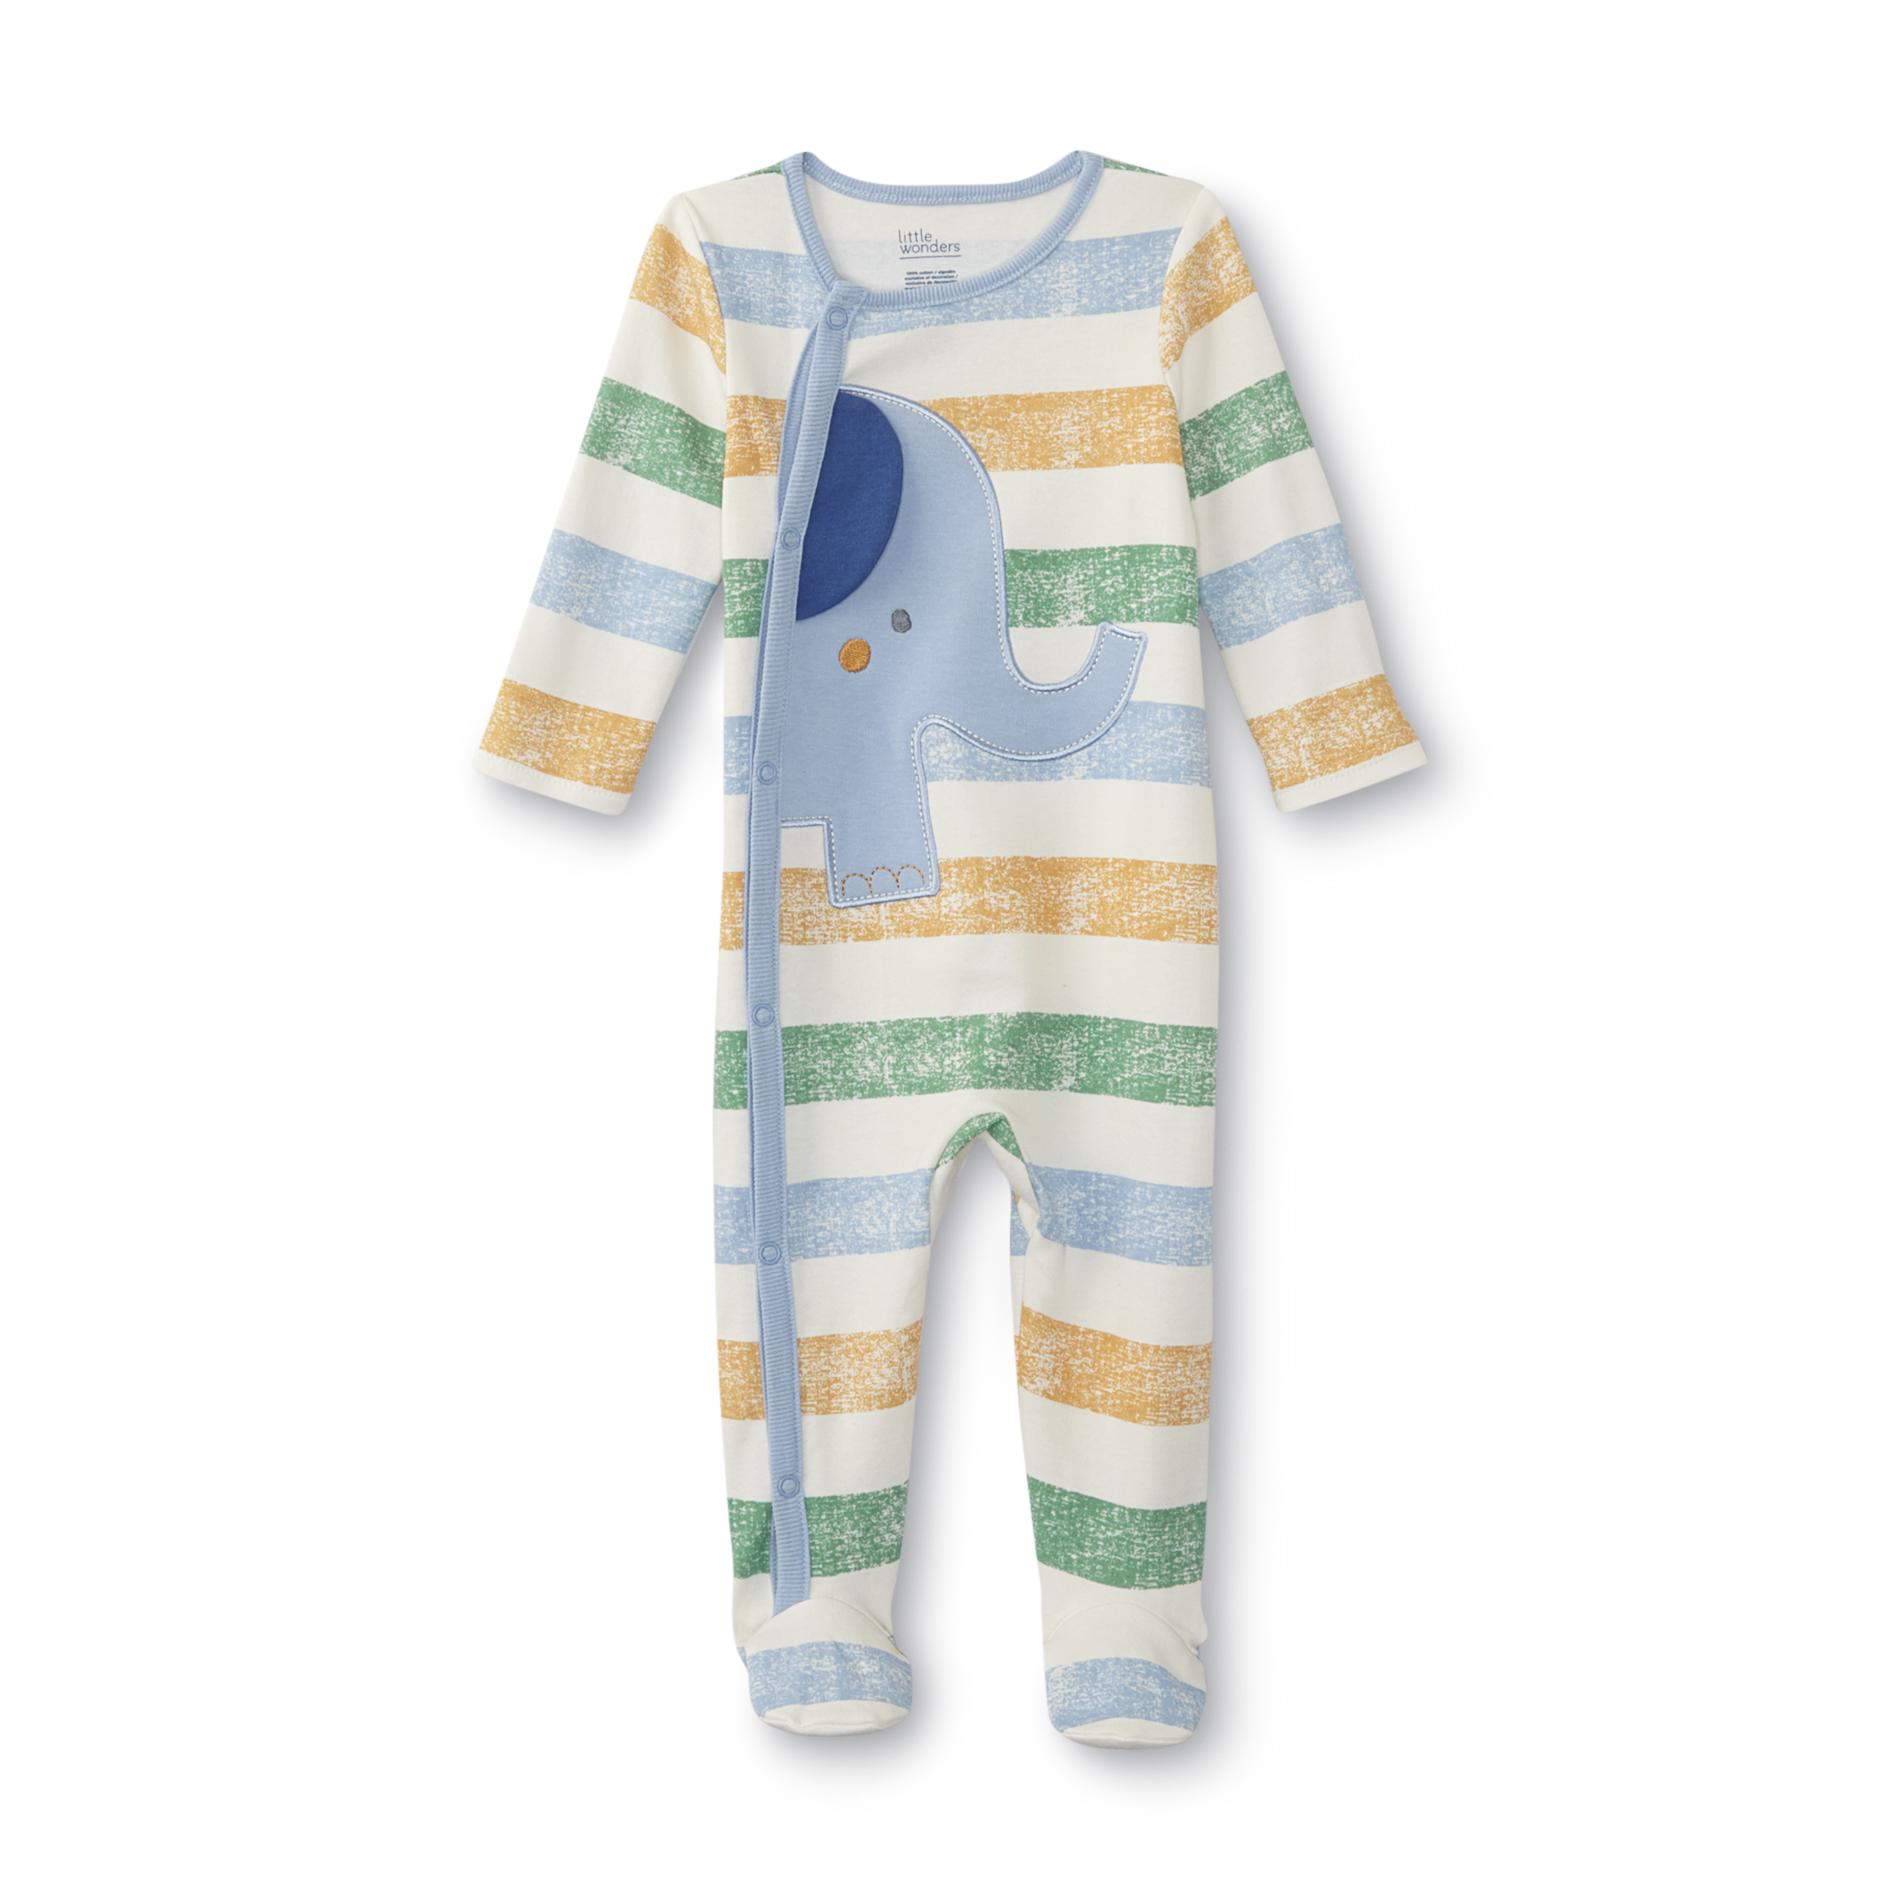 Little Wonders Newborn Boy's Sleeper Pajamas - Elephant